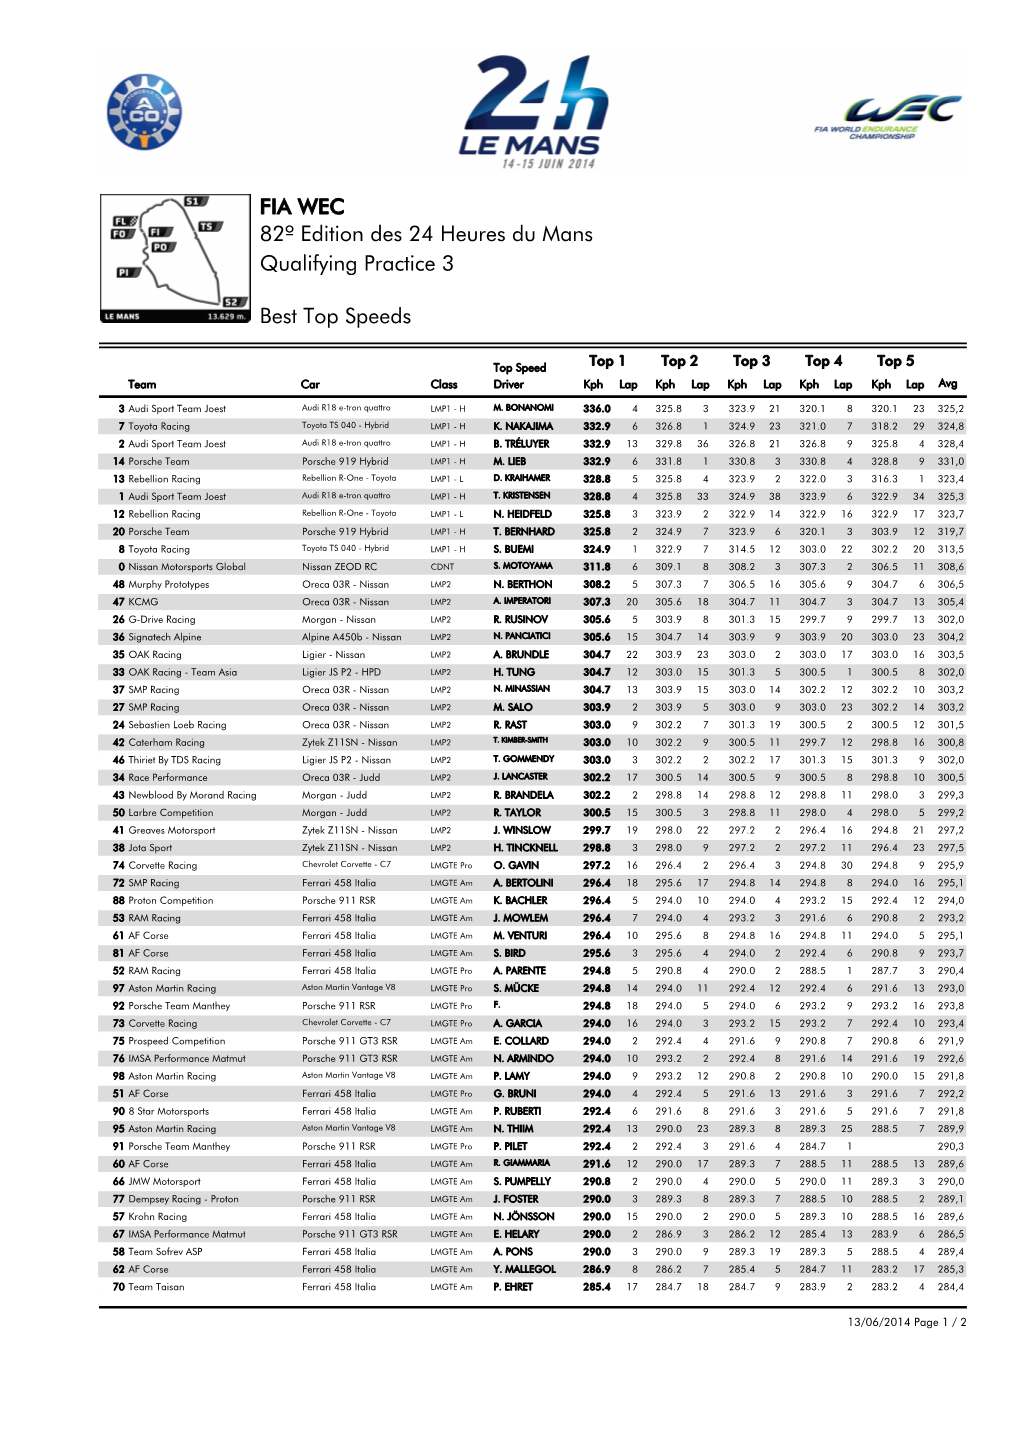 Best Top Speeds Qualifying Practice 3 82º Edition Des 24 Heures Du